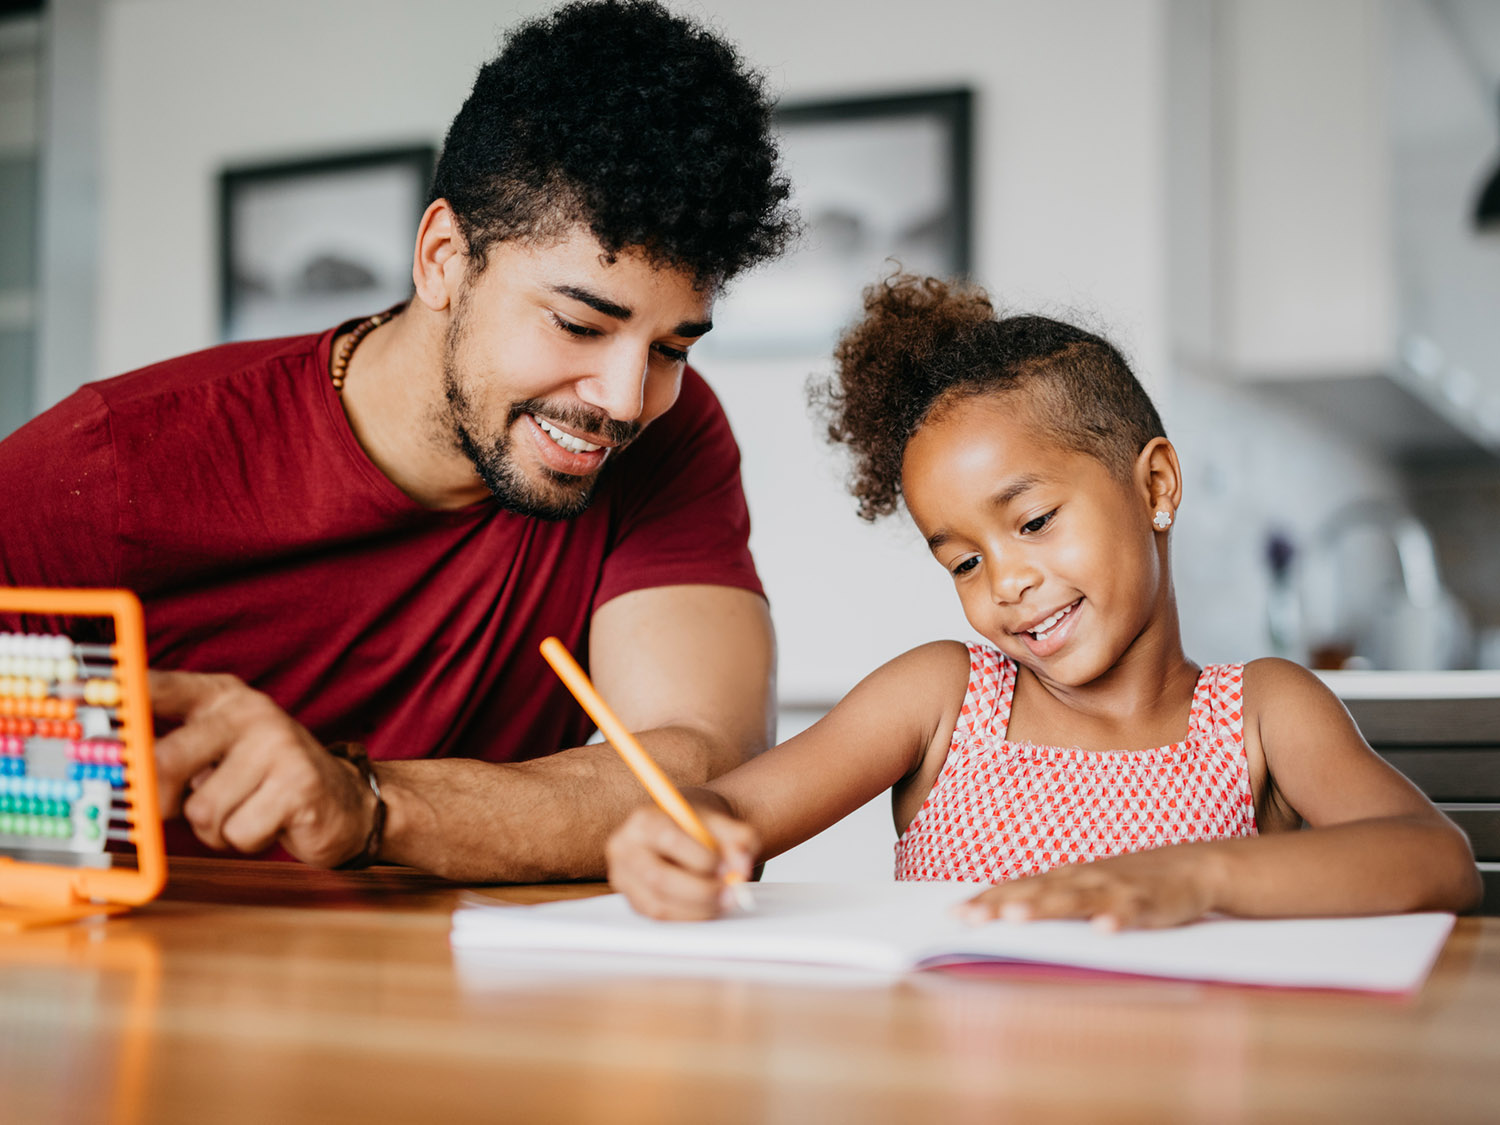 Homework help resources for parents